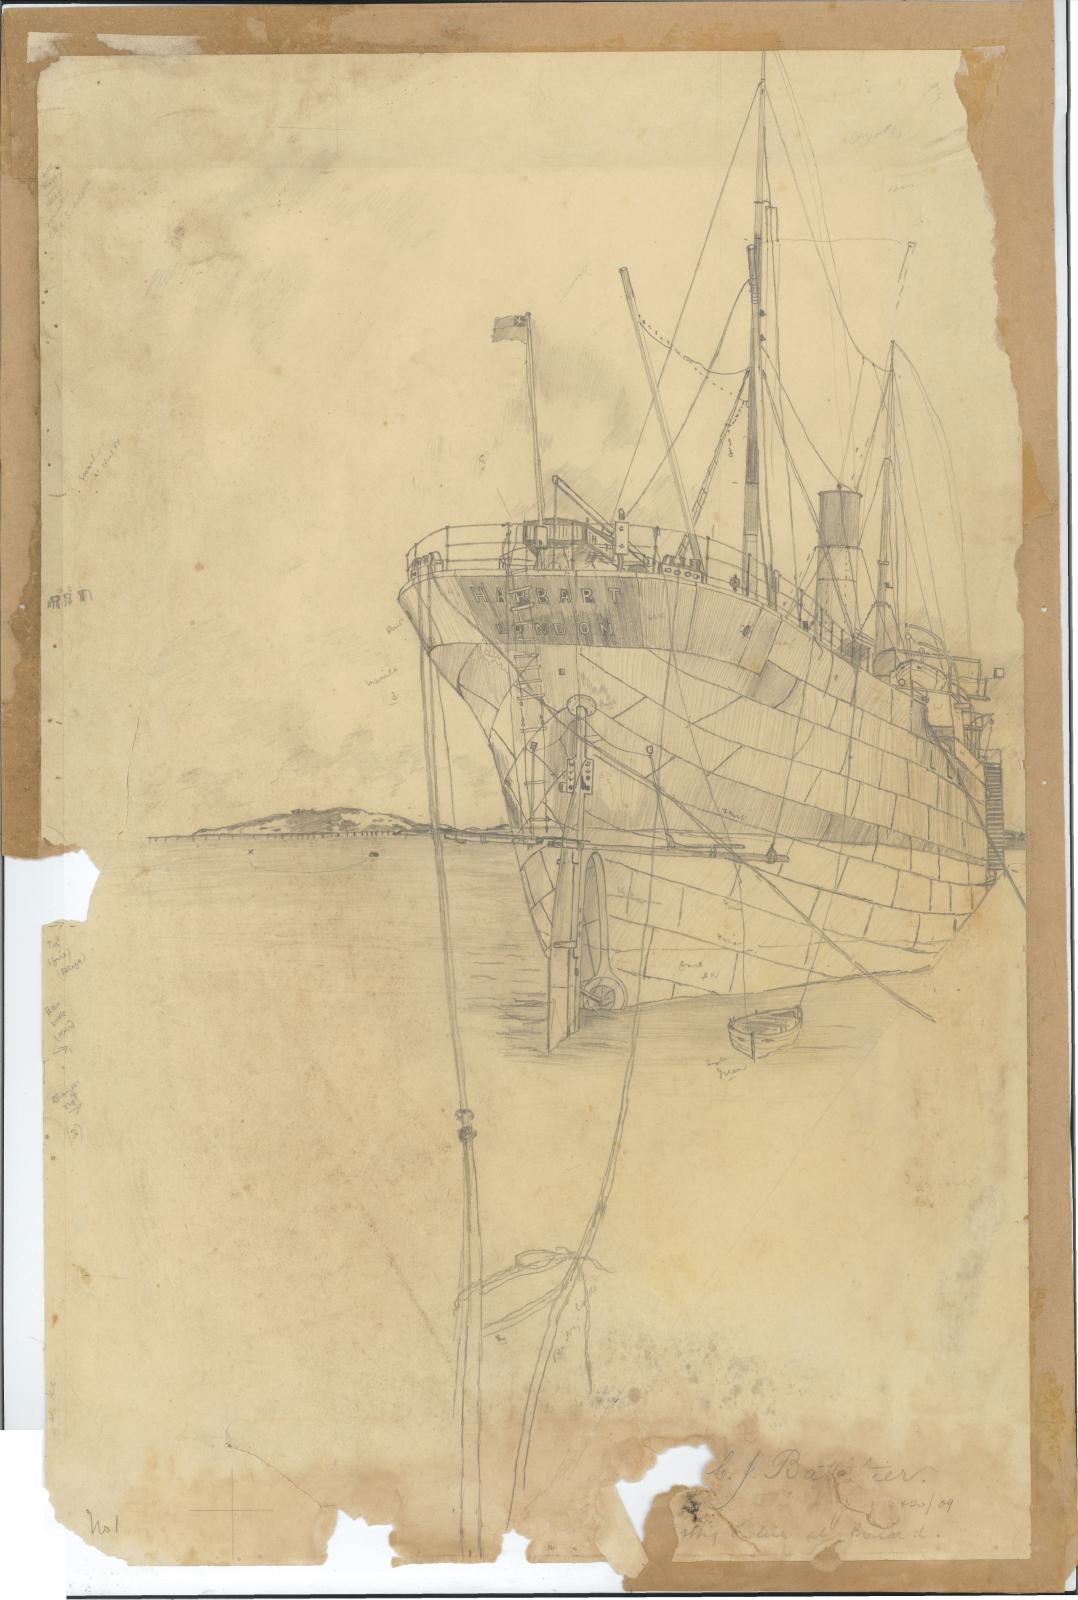 SS HARBART pencil sketch.